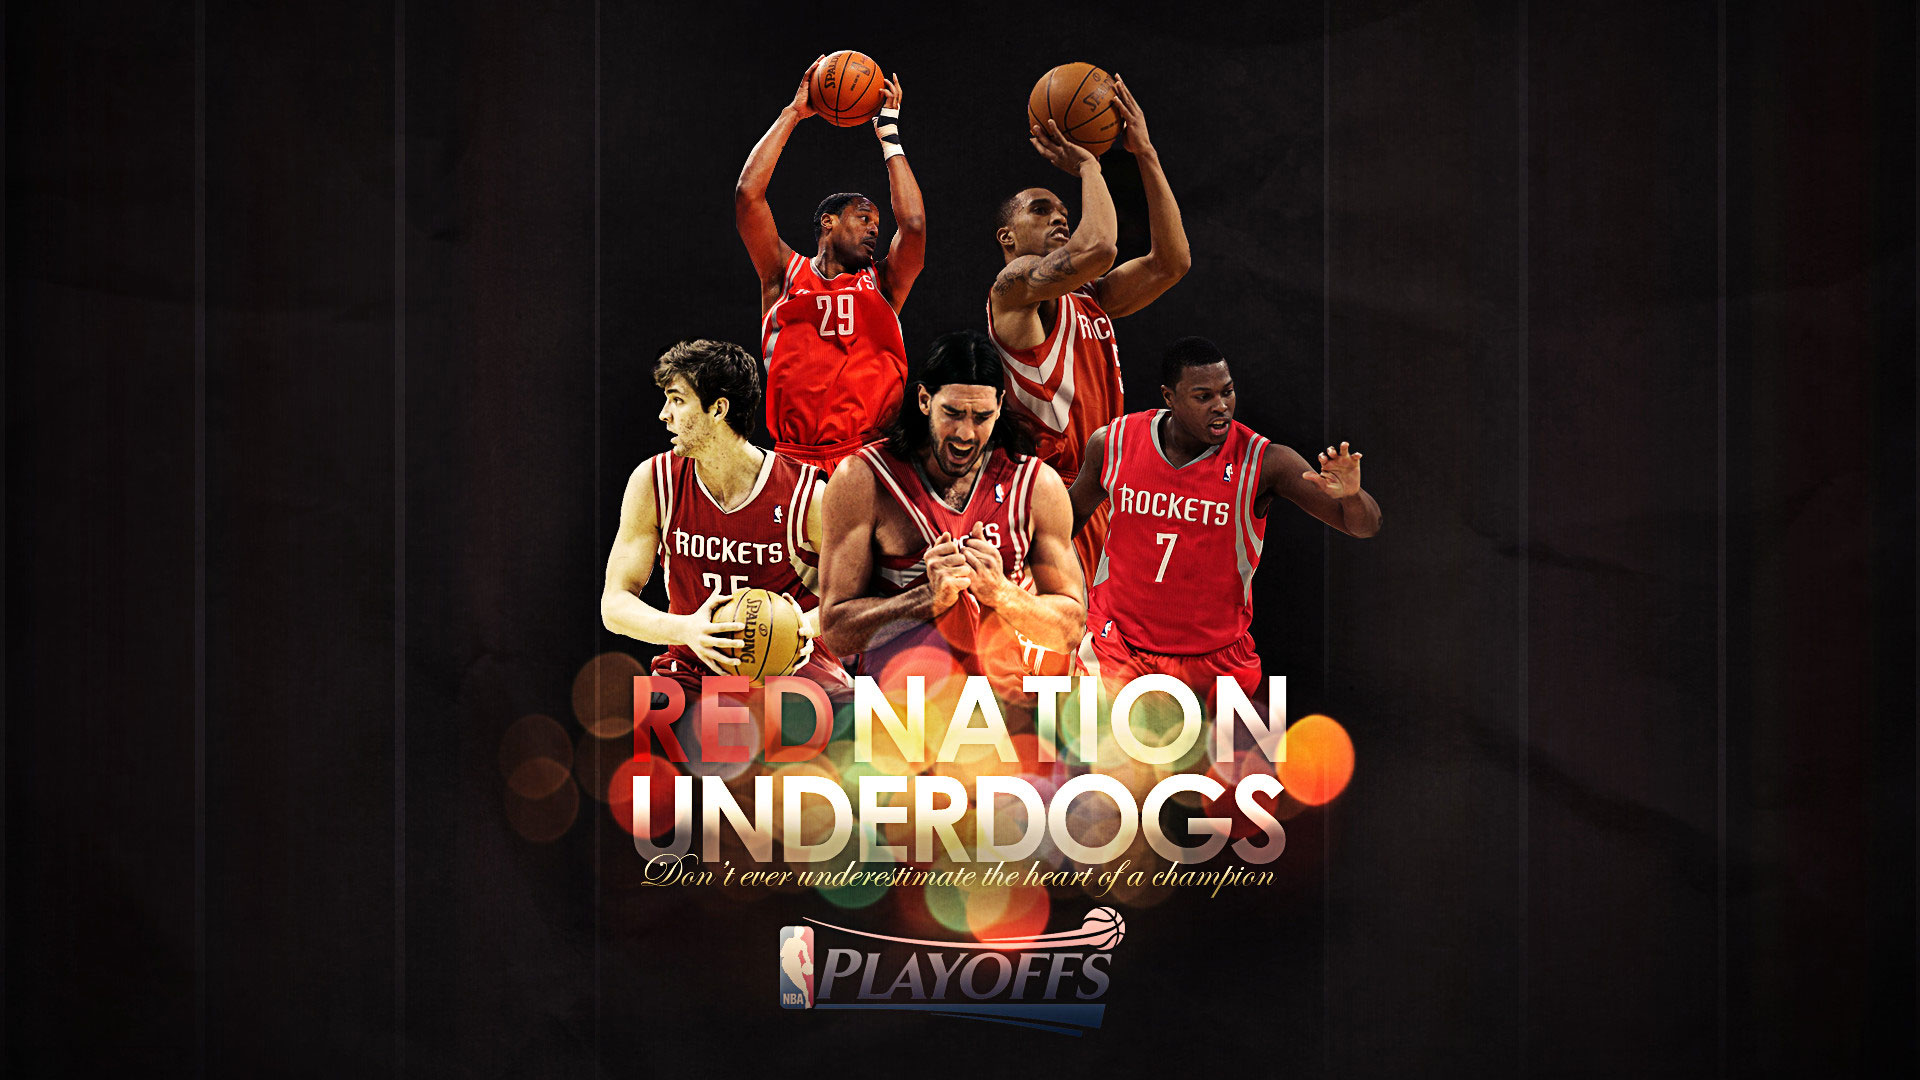 Rockets 2012 Playoffs 1920×1080 Wallpaper | Basketball Wallpapers at BasketWallpapers.com